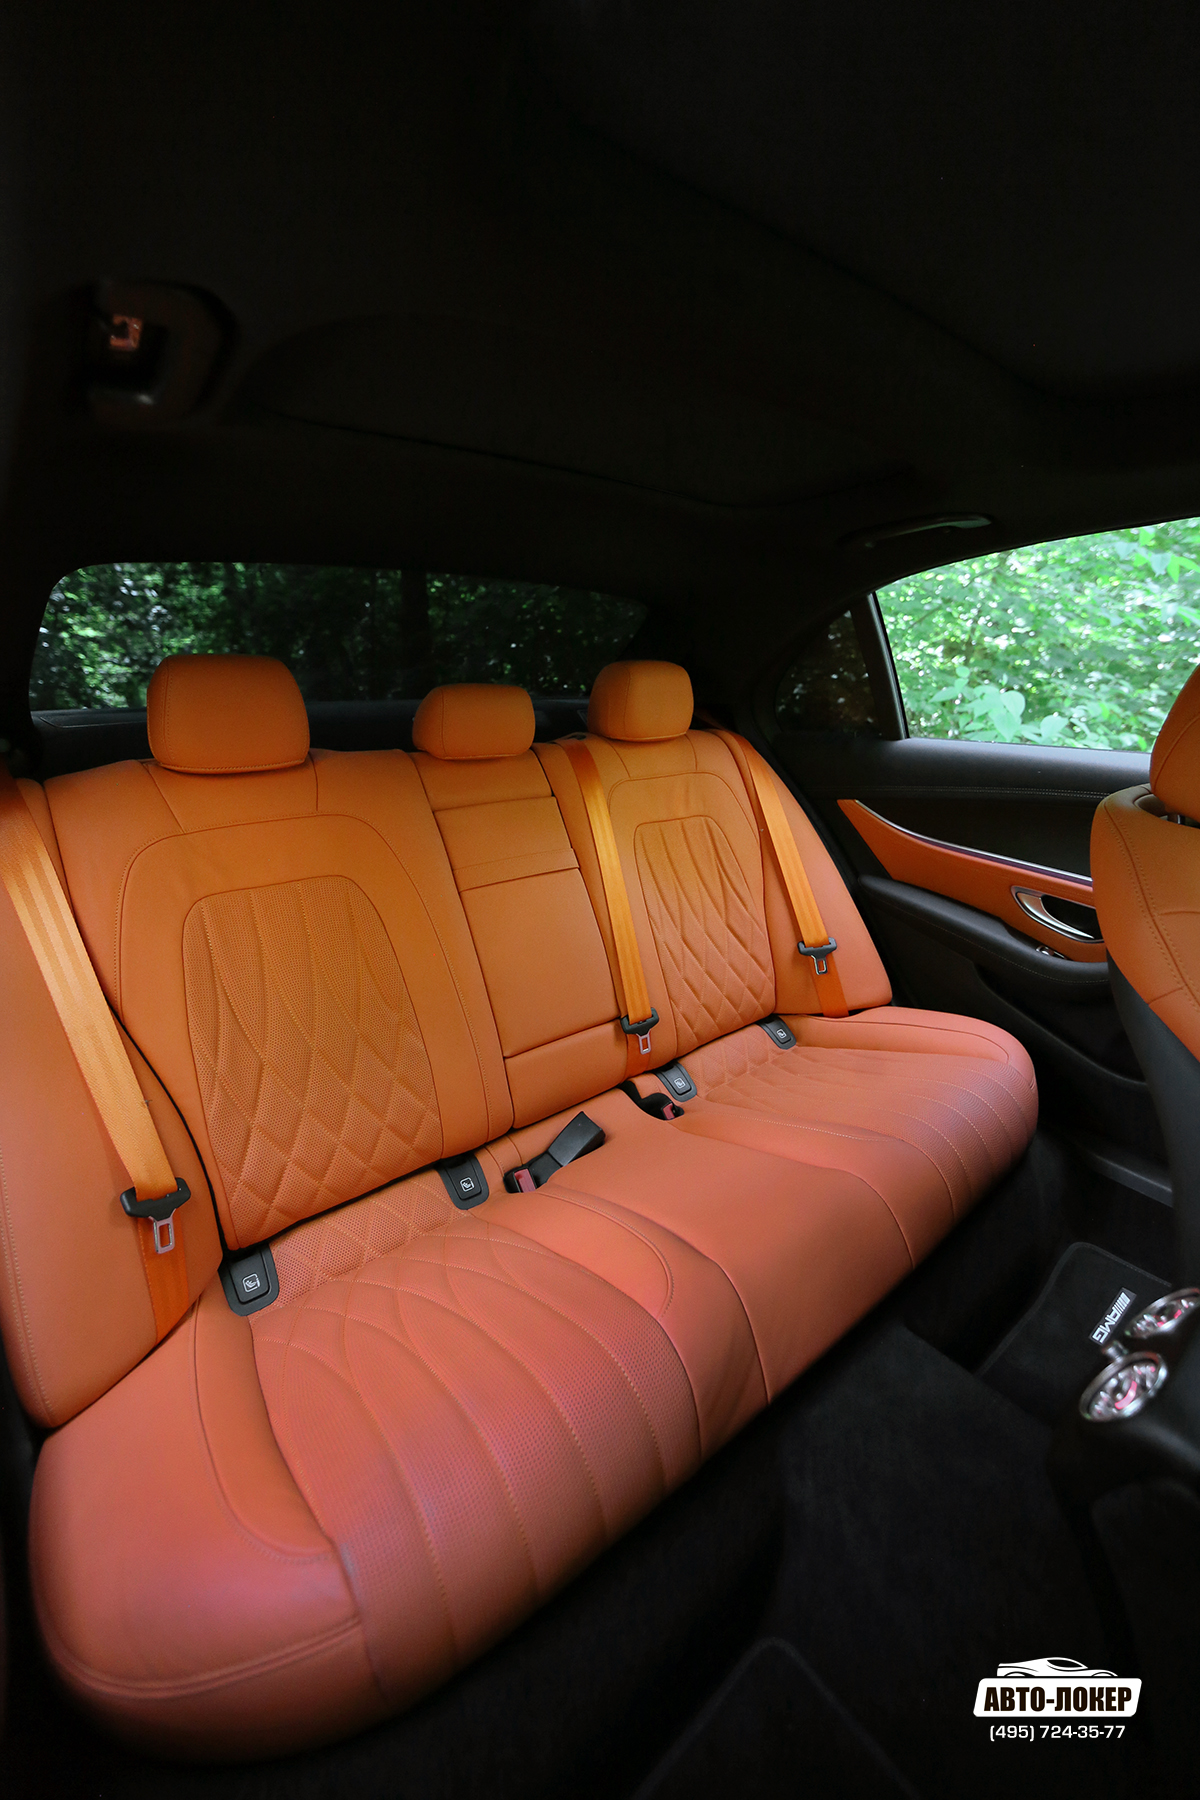 Перетяжка салона оранжевой кожей на Mercedes E klass W213